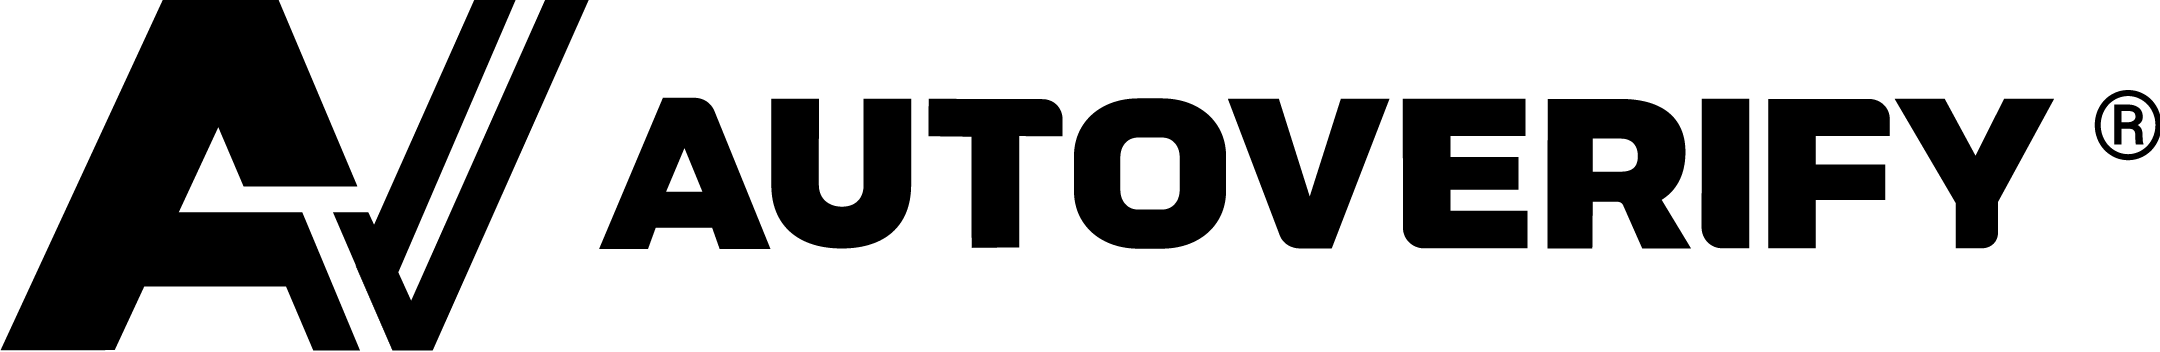 autoverify logo